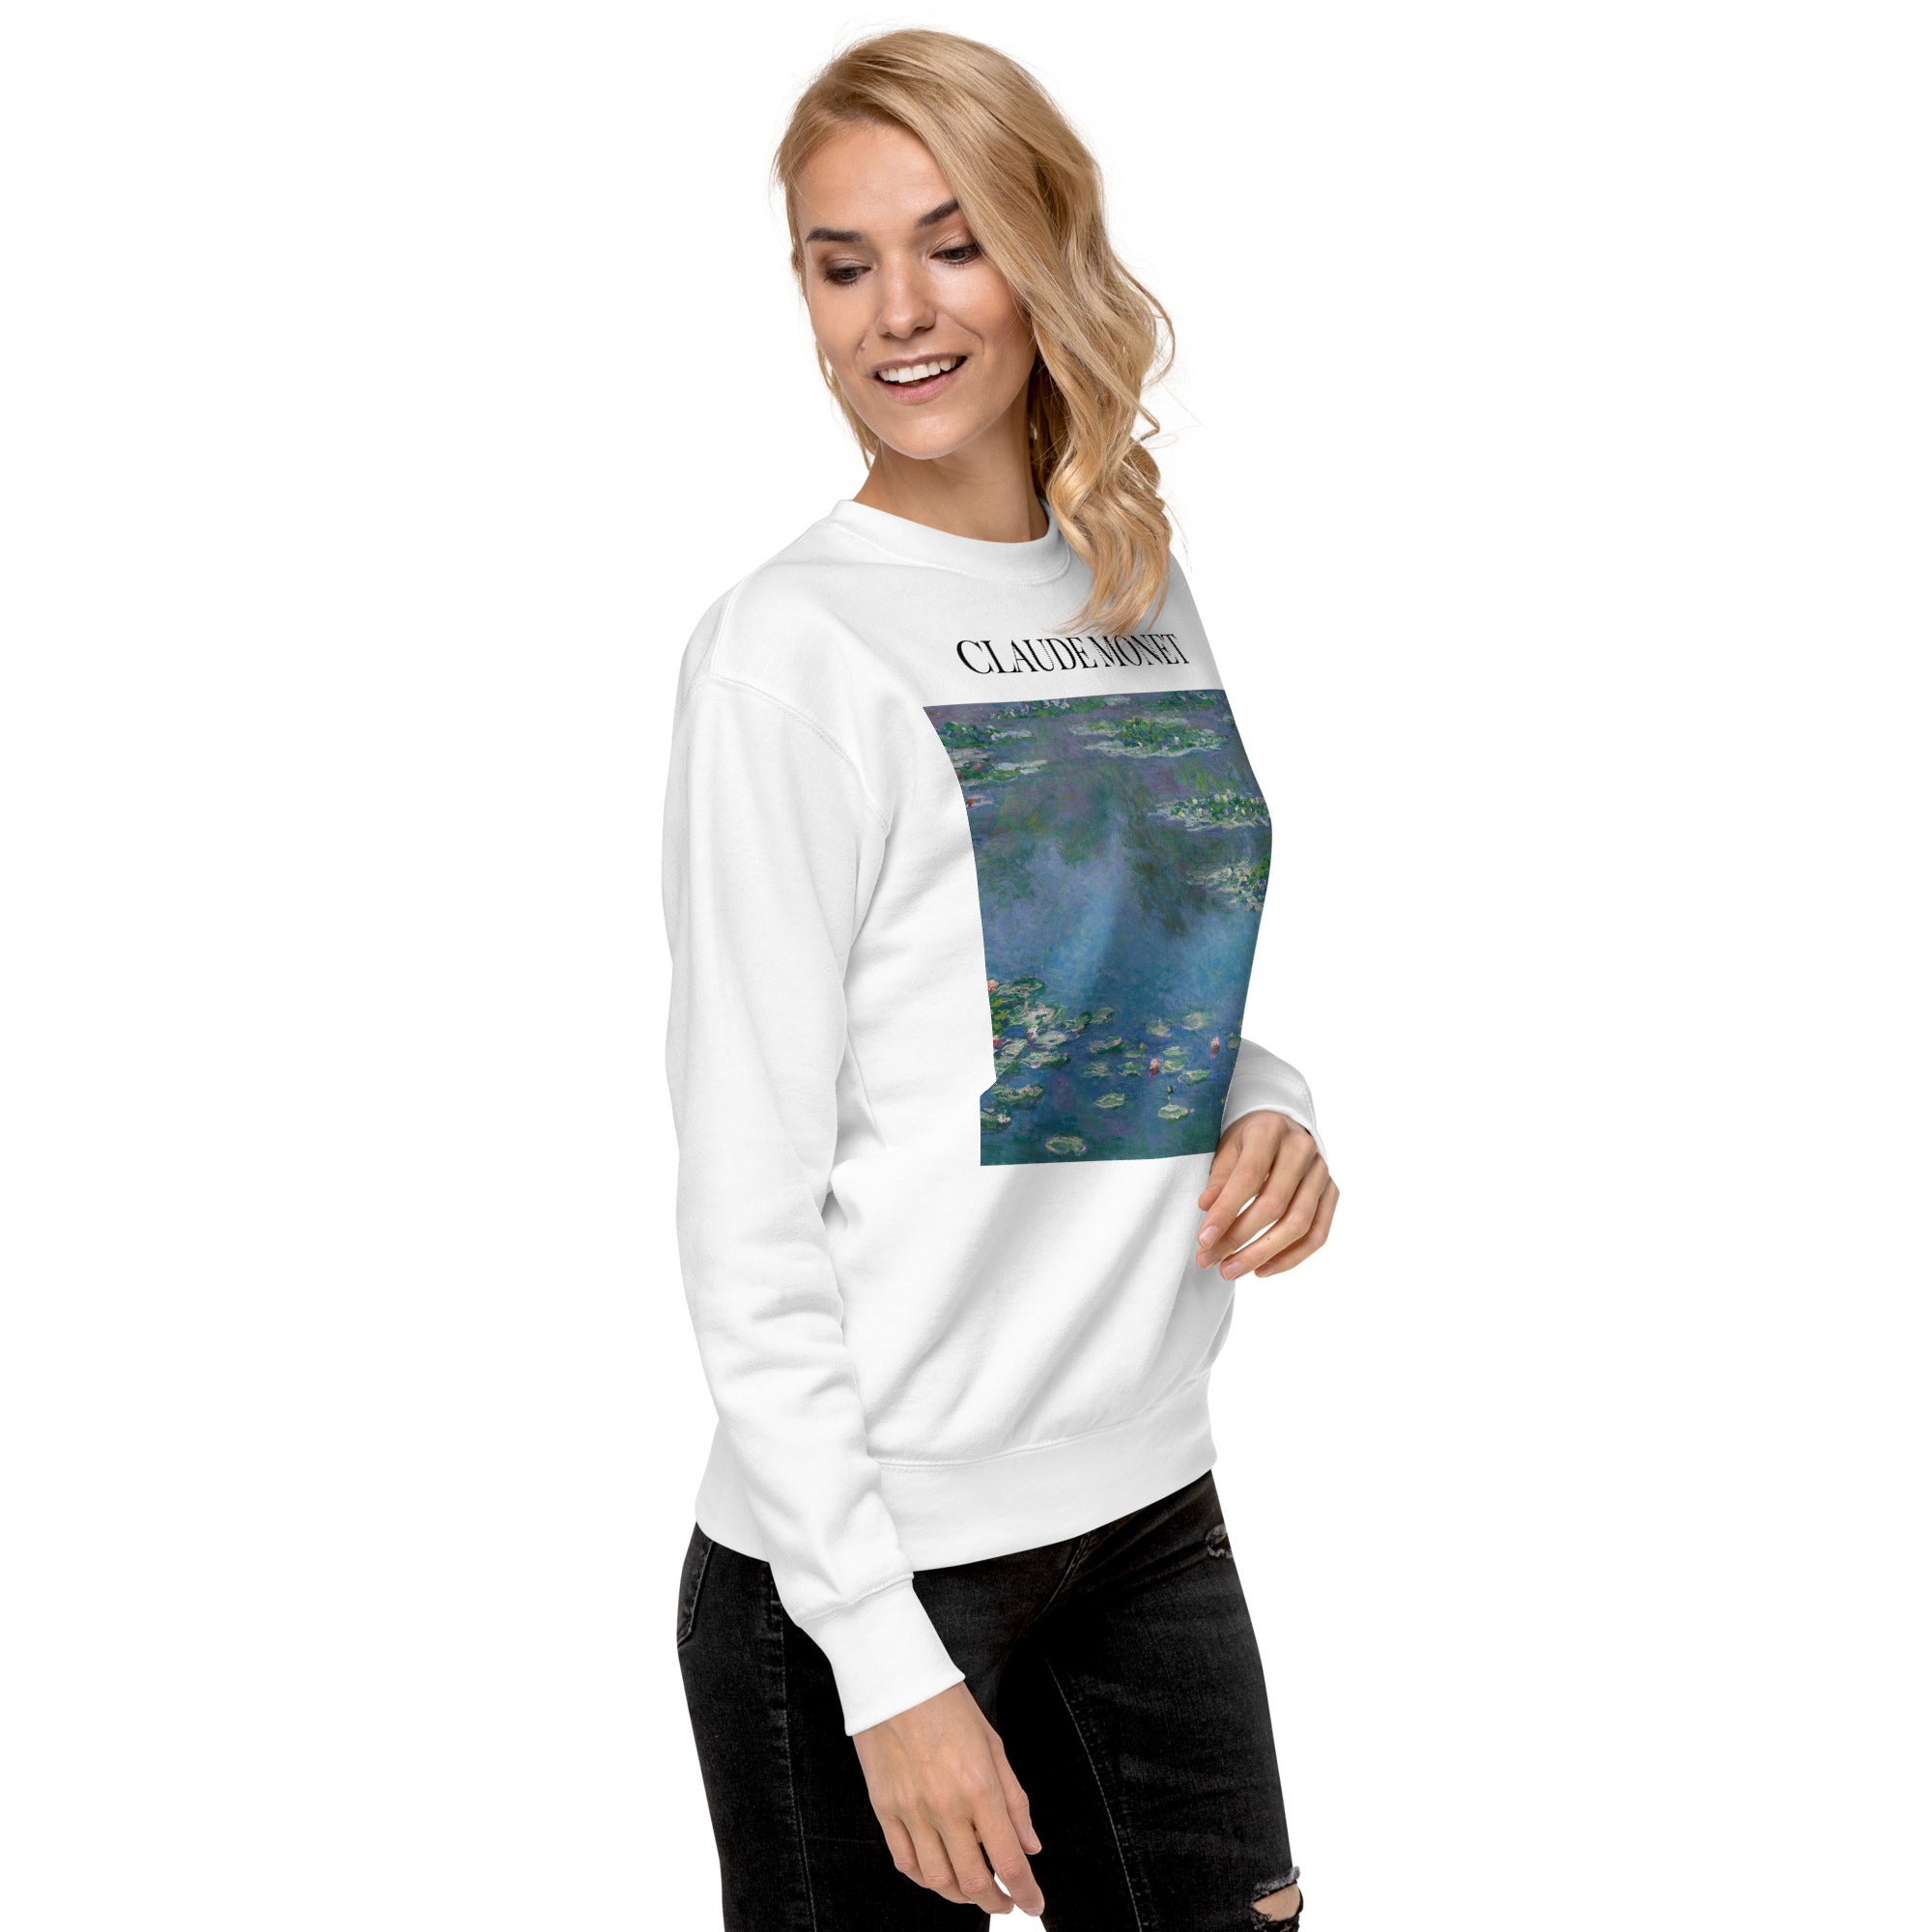 Claude Monet 'Water Lilies' Famous Painting Sweatshirt | Unisex Premium Sweatshirt